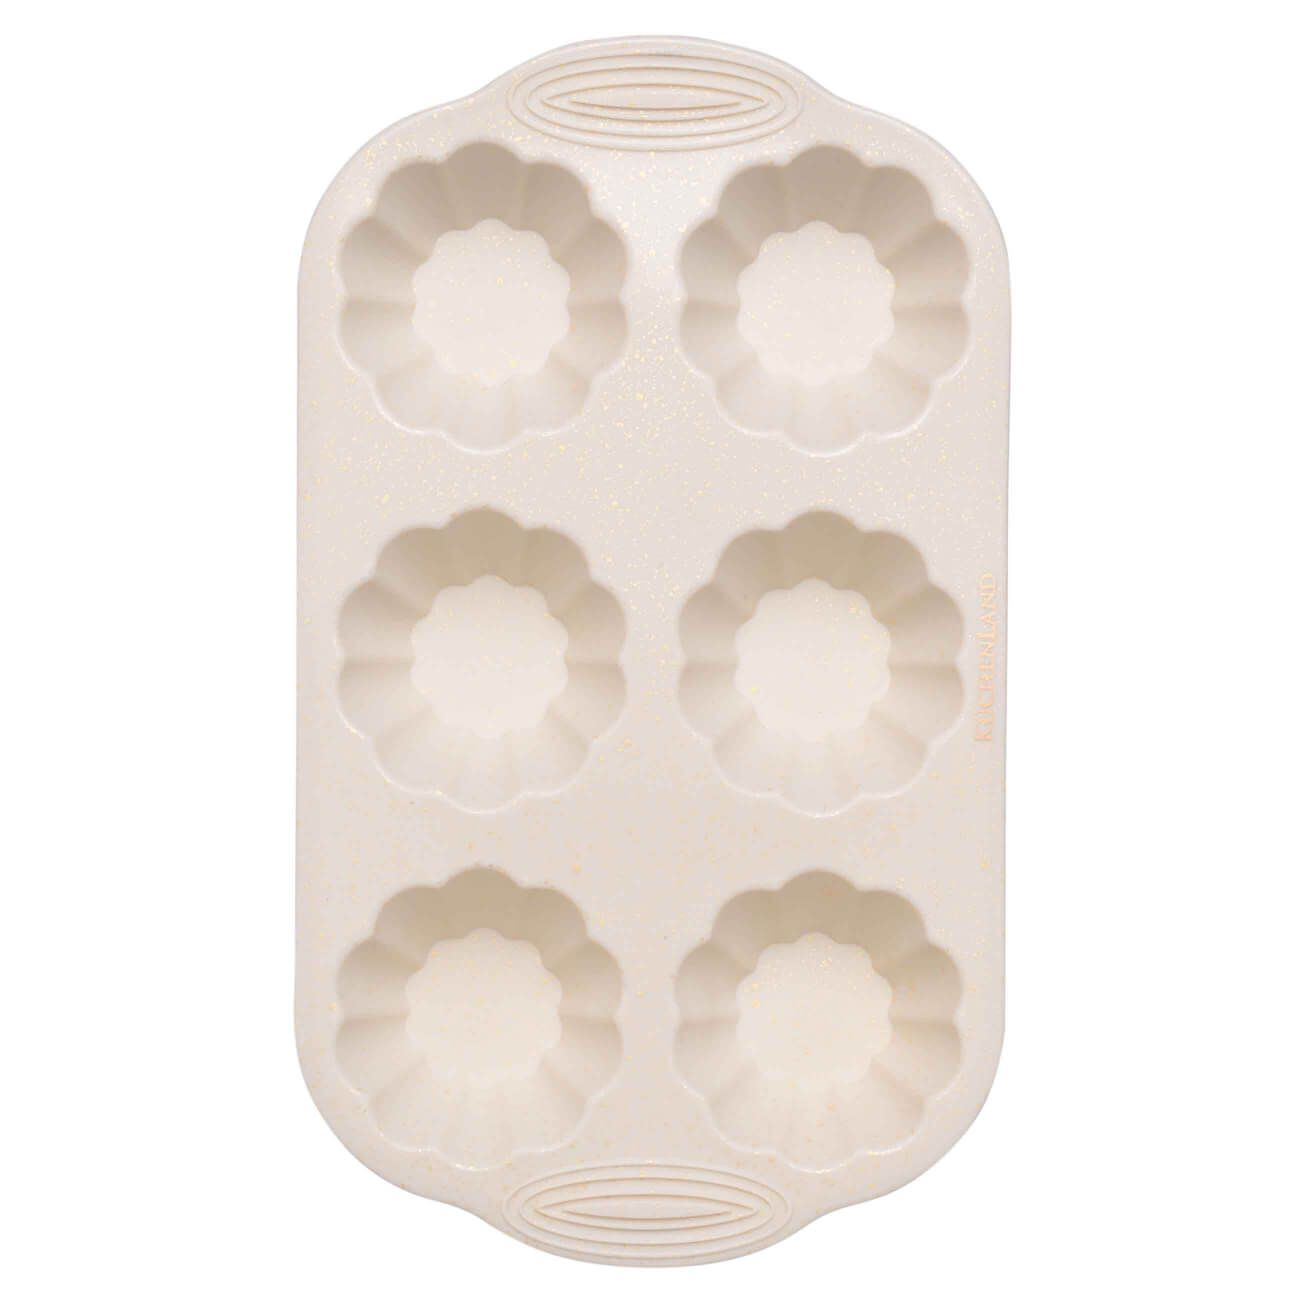 Форма для выпечки кексов, 28x19 см, 6 отд, молочная, в крапинку, силикон, Bakery speckled форма для выпечки кексов tavolone